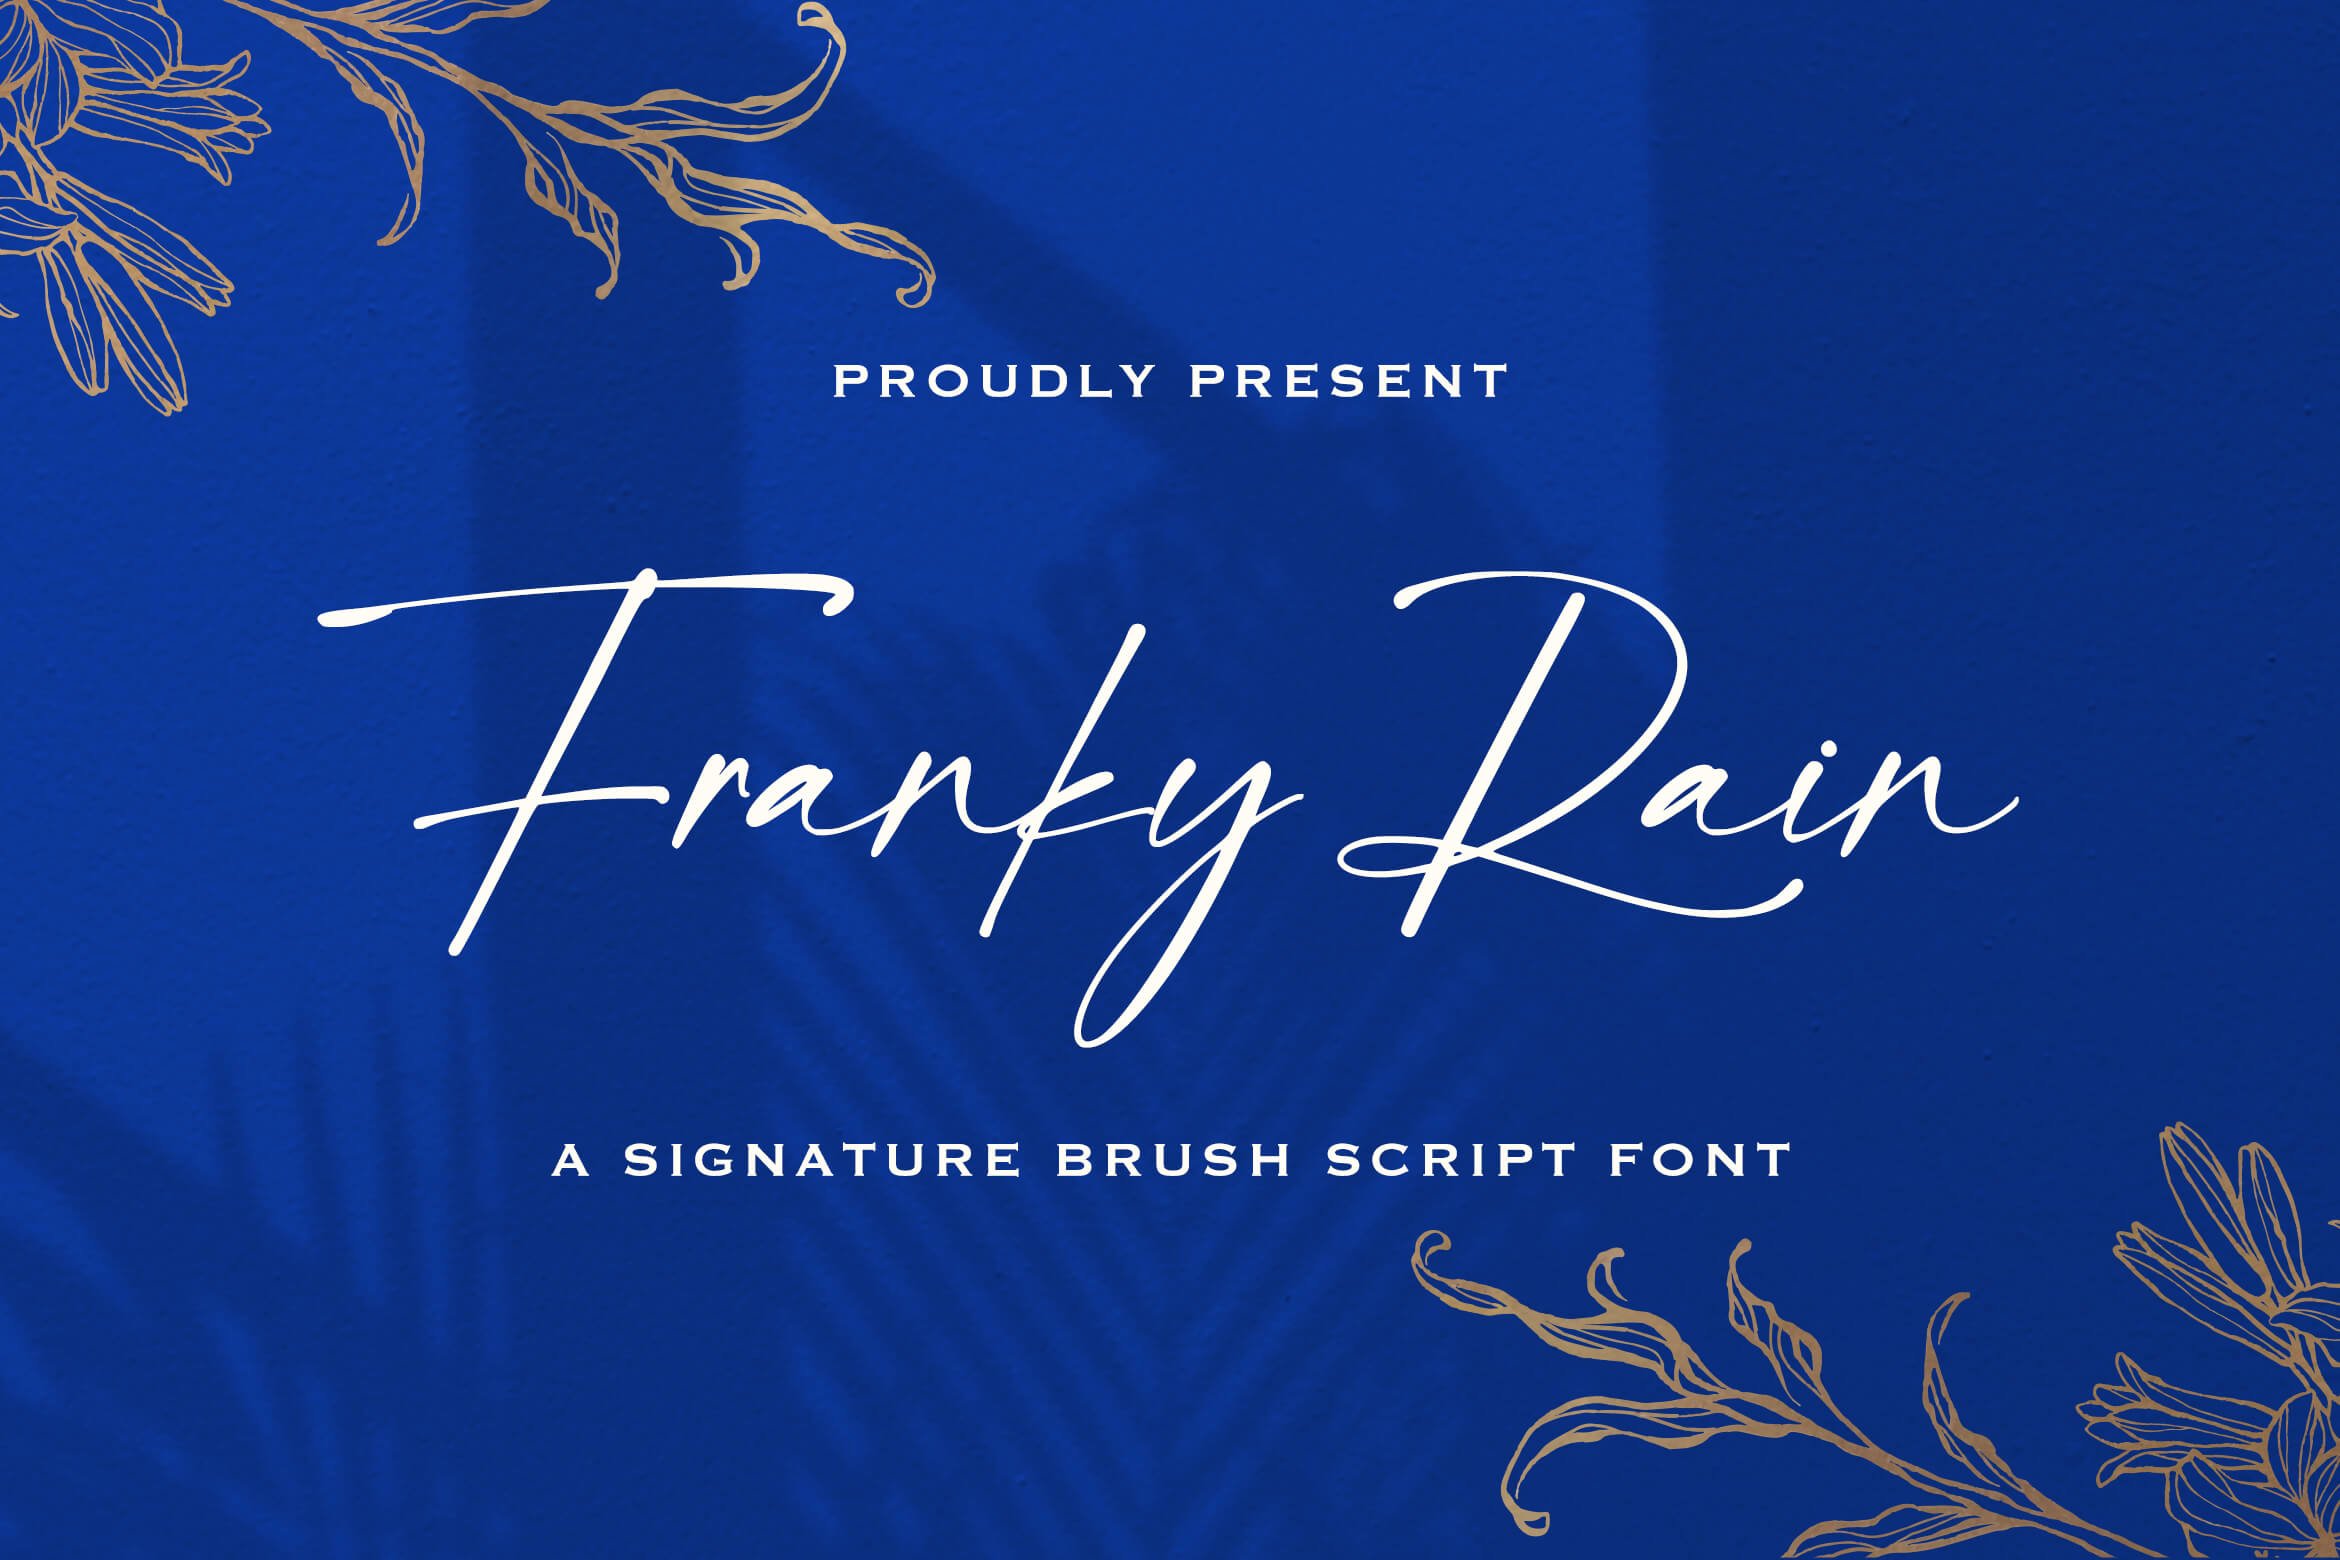 Franky Rain - Signature Script Font cover image.